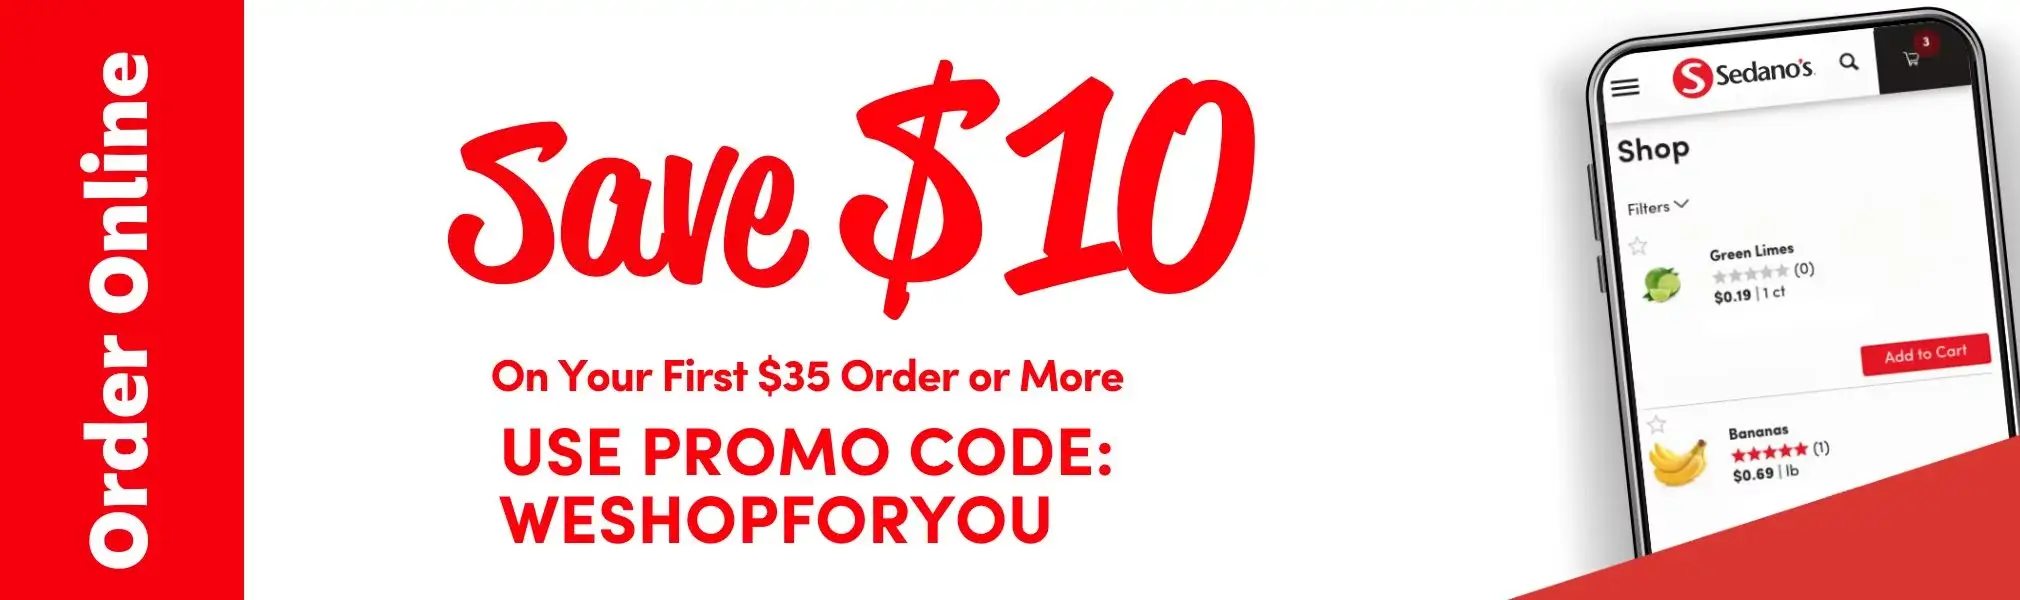 Sedanos.com Save $10 On First Online Order